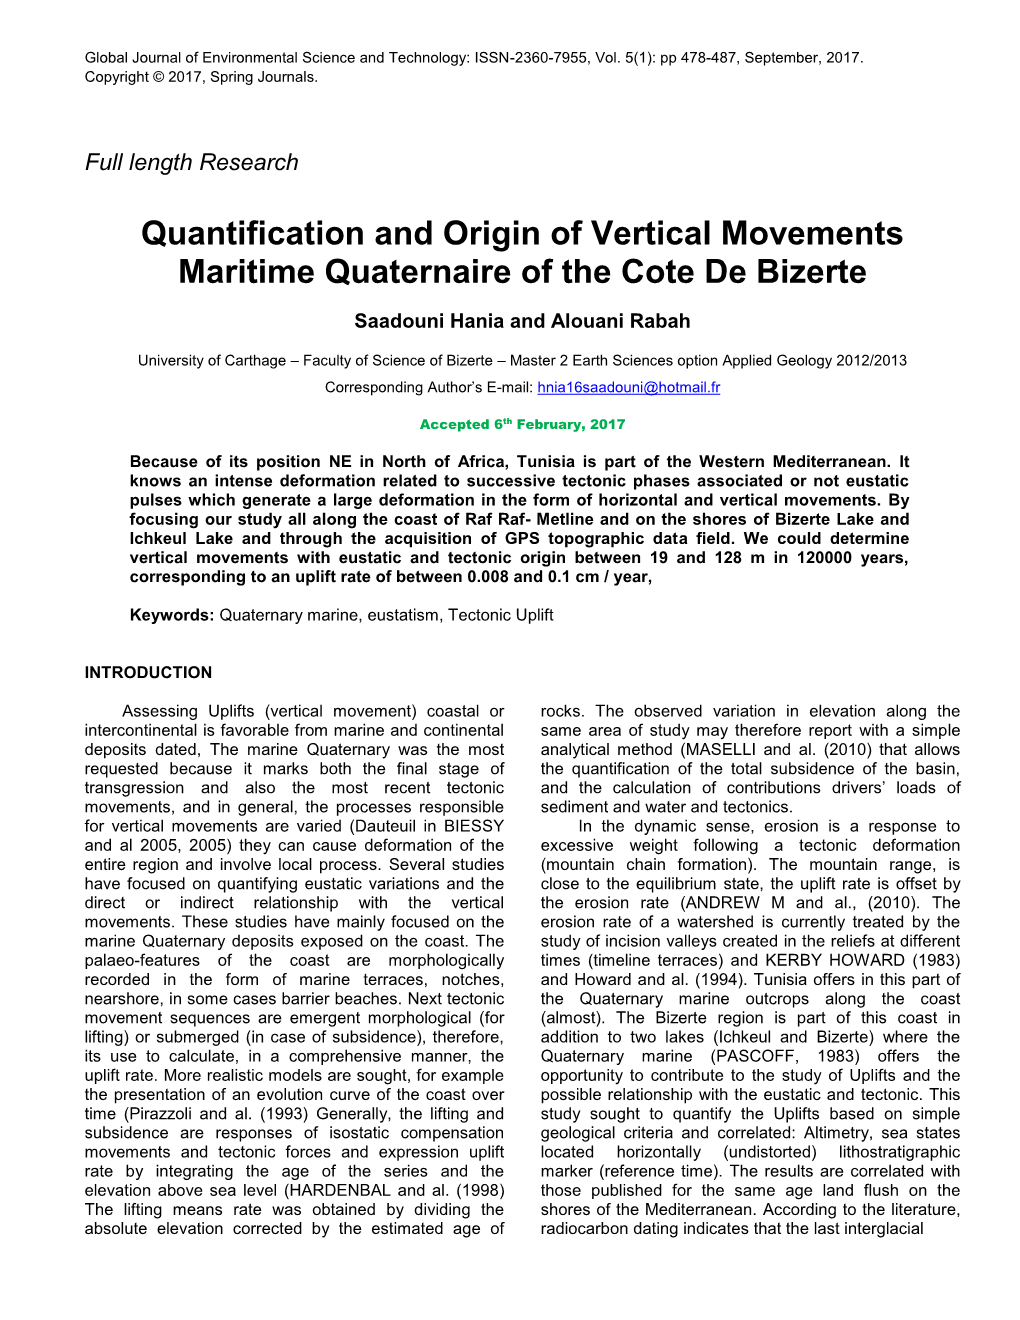 Quantification and Origin of Vertical Movements Maritime Quaternaire of the Cote De Bizerte